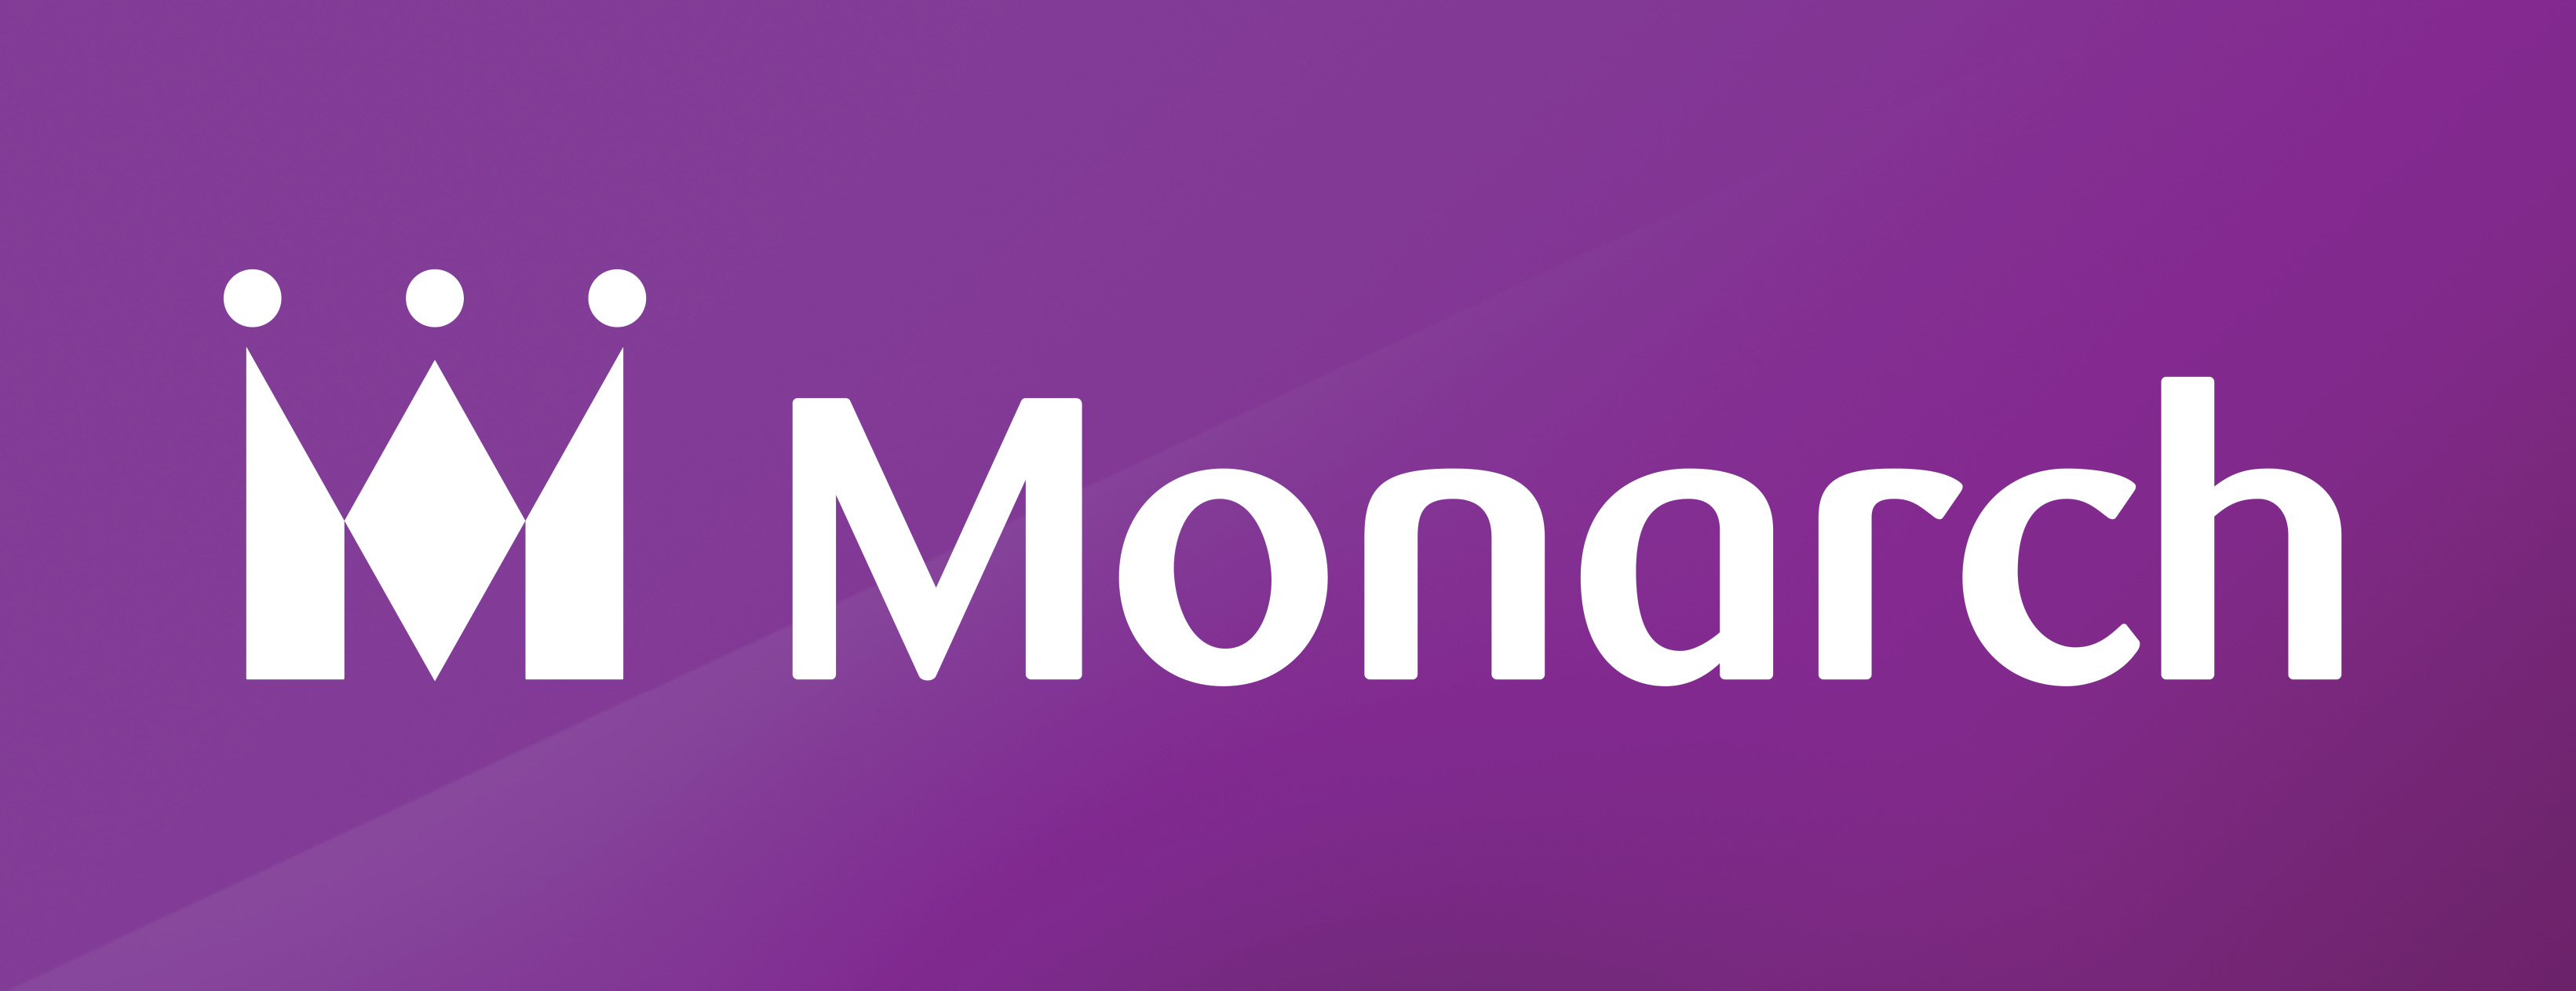 Monarch Growers Logo photo - 1